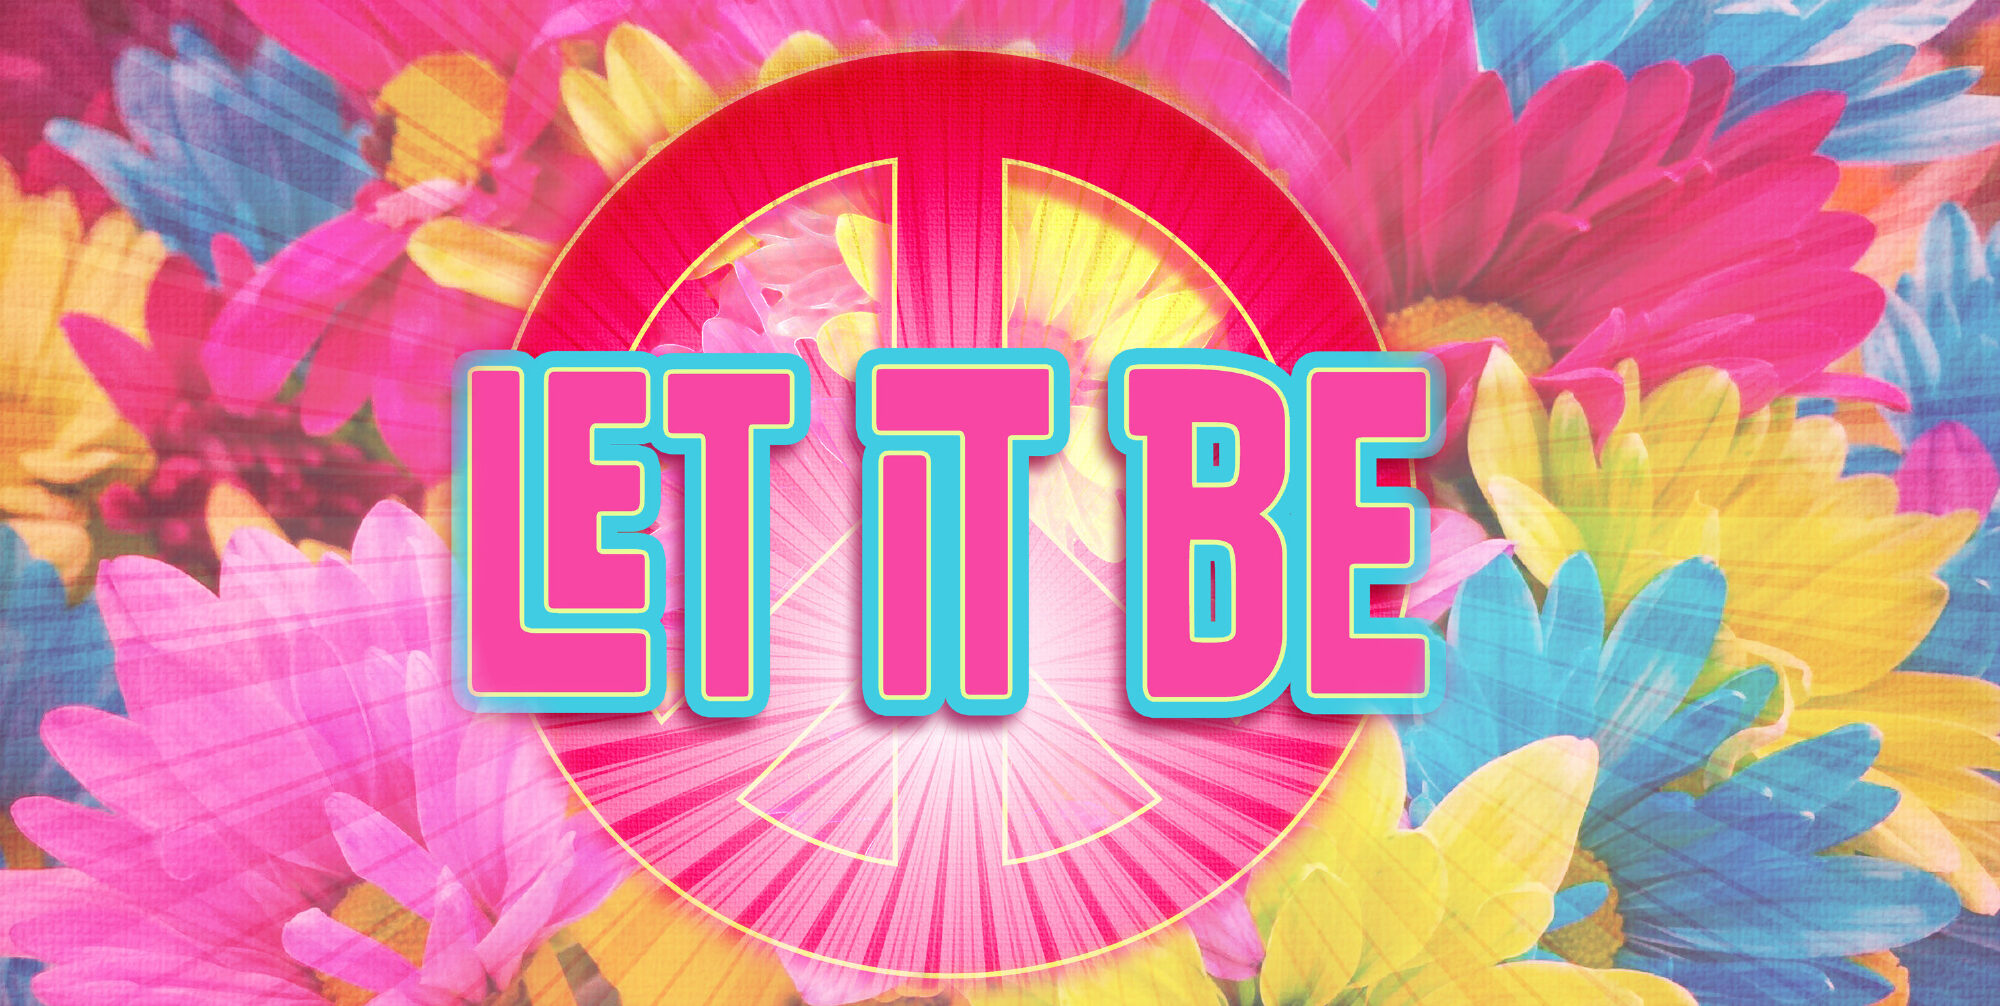 Let it Be